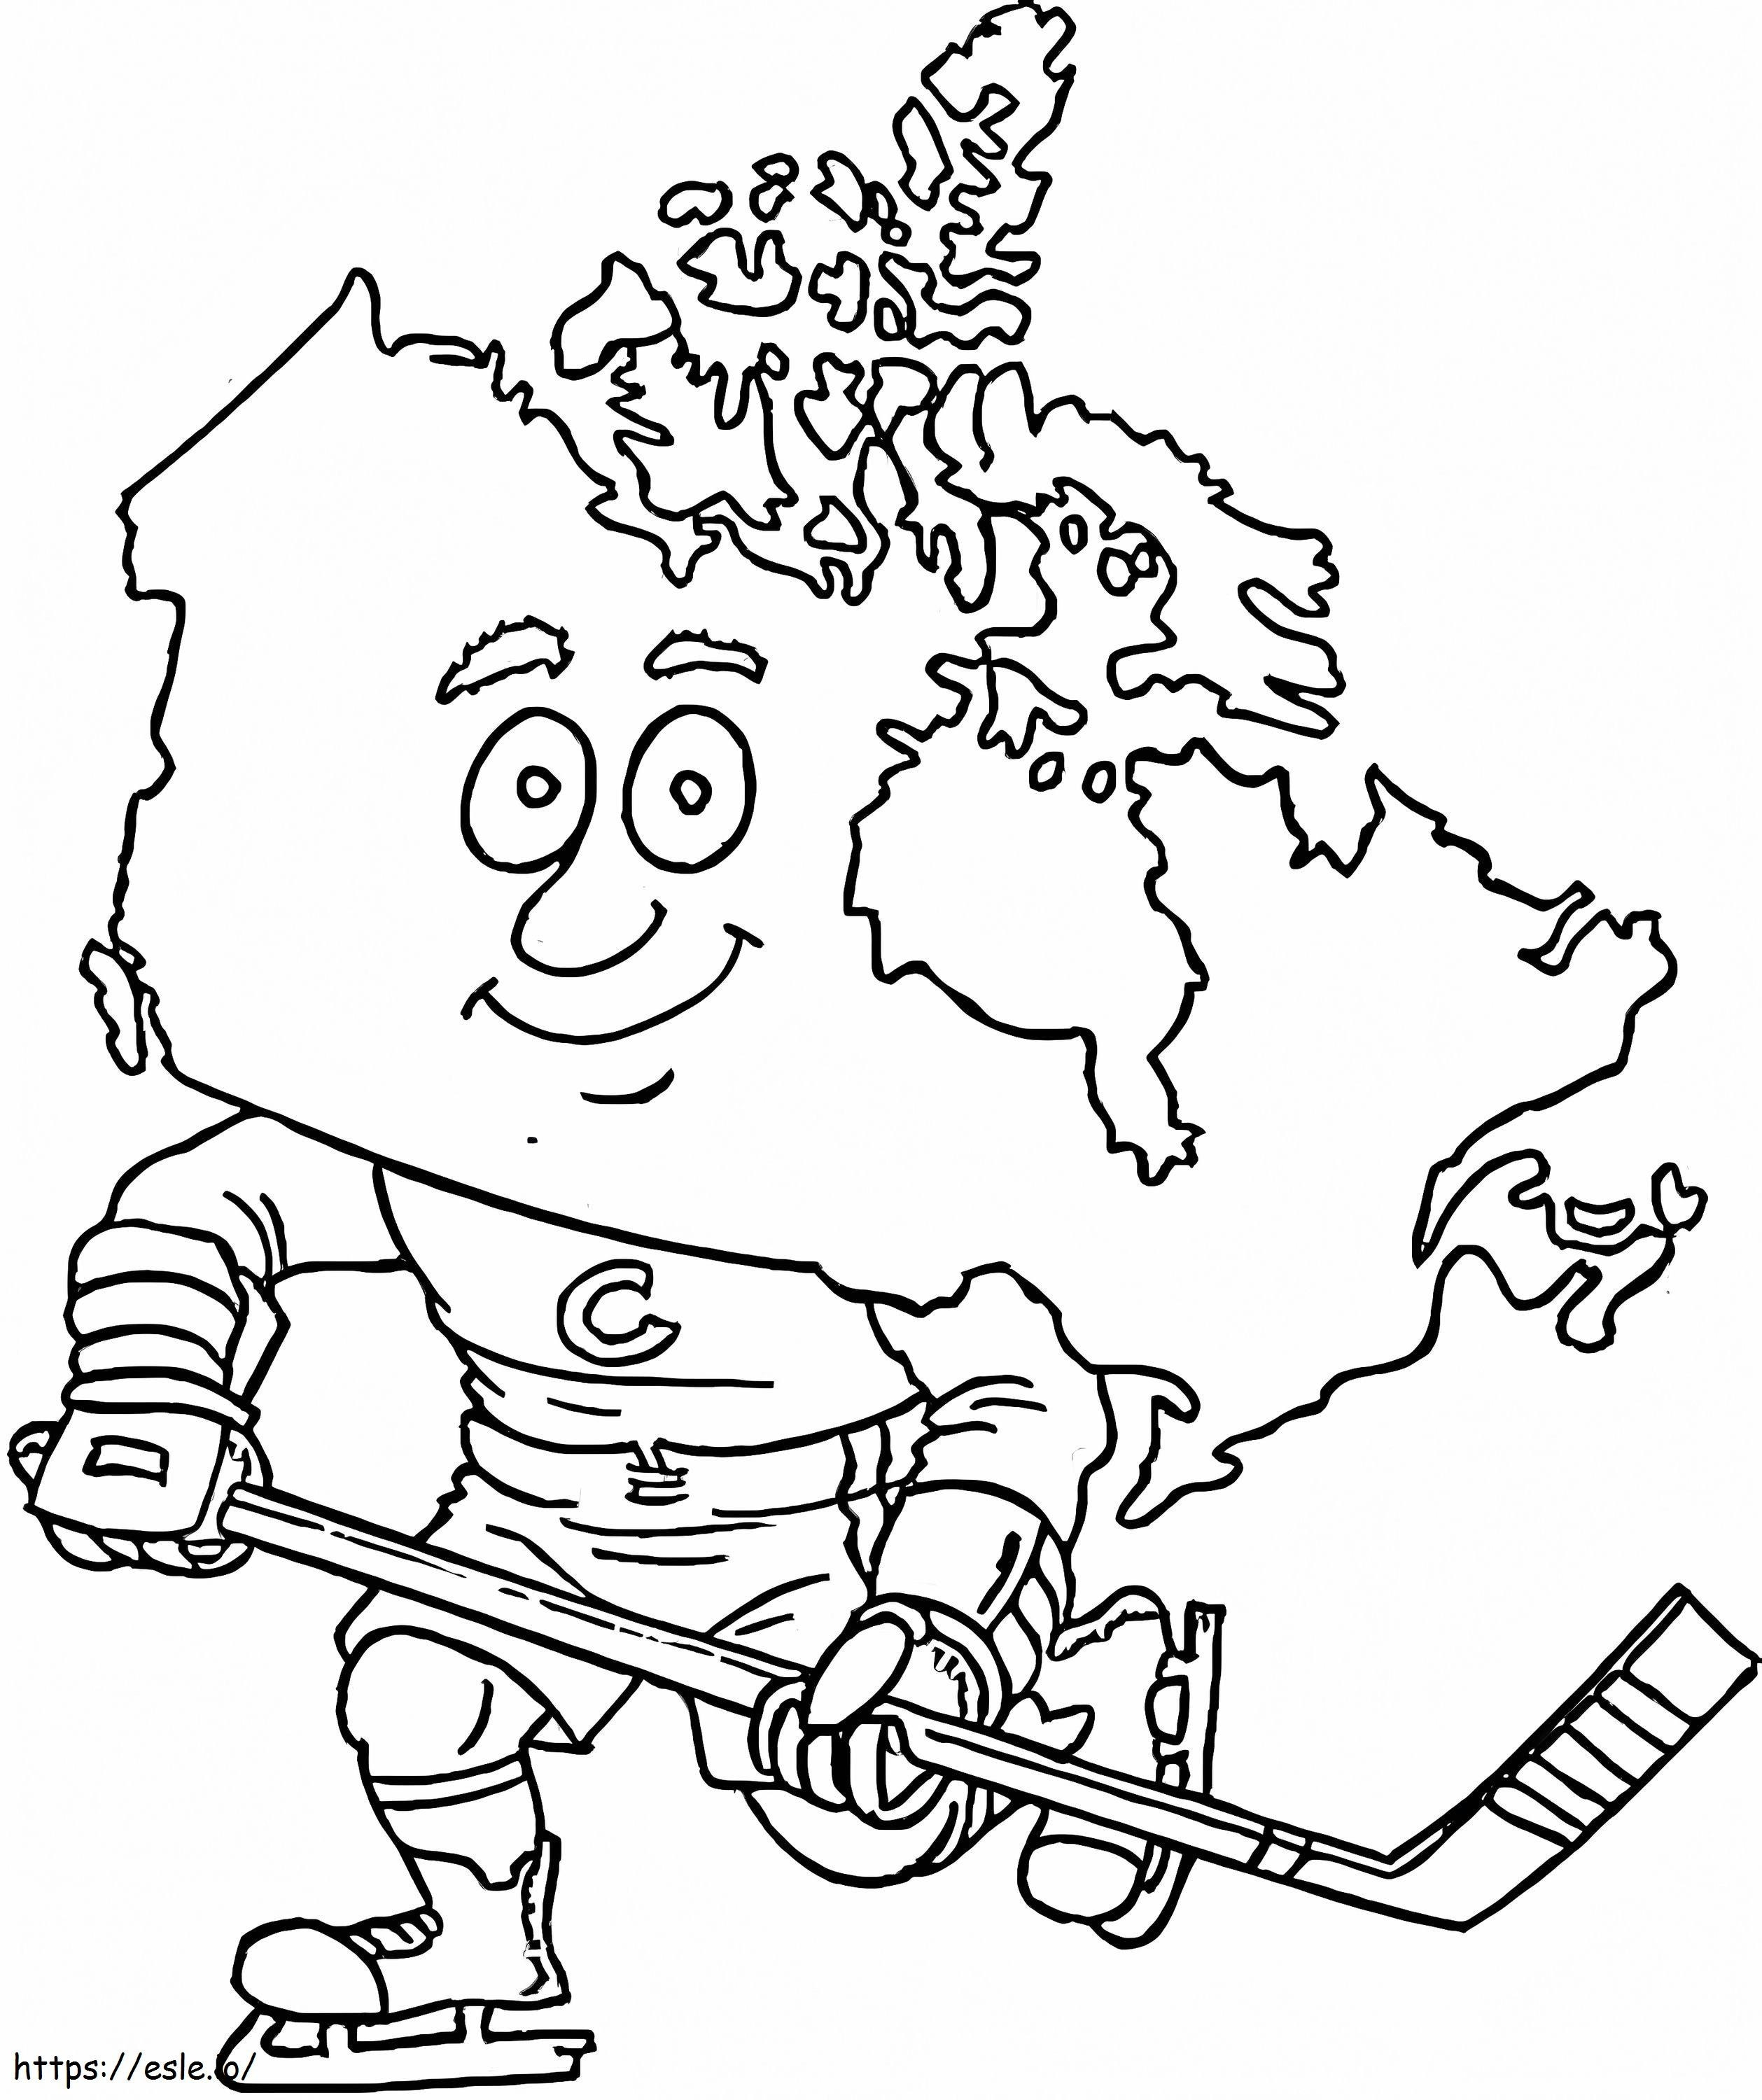 Harta Canadei de colorat